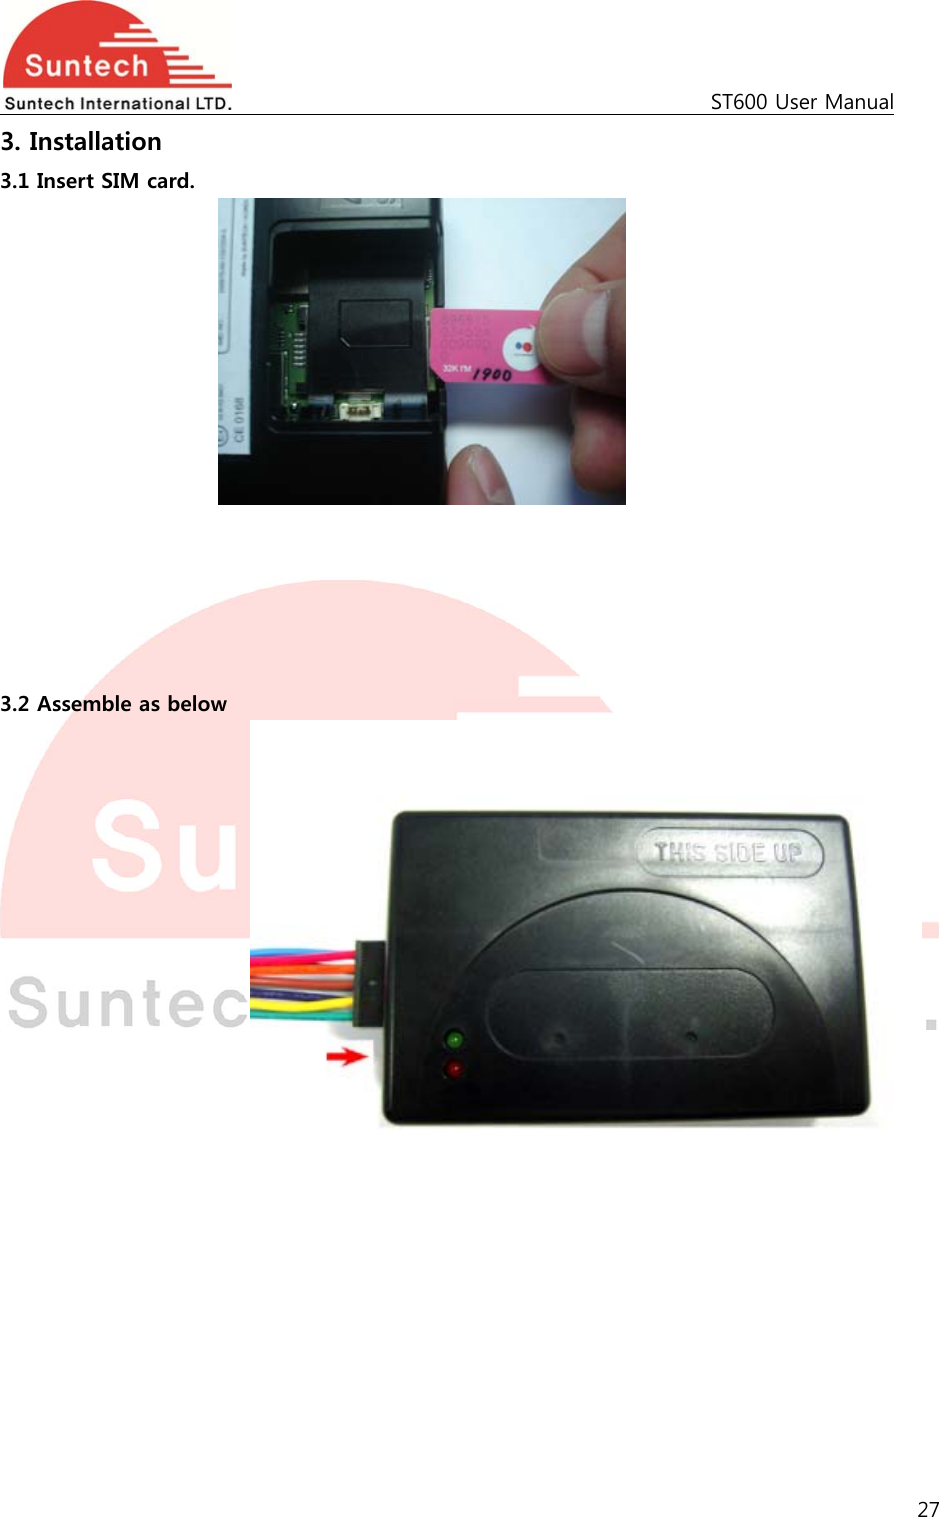                                                                                             ST600 User Manual 27  3. Installation 3.1 Insert SIM card.       3.2 Assemble as below  